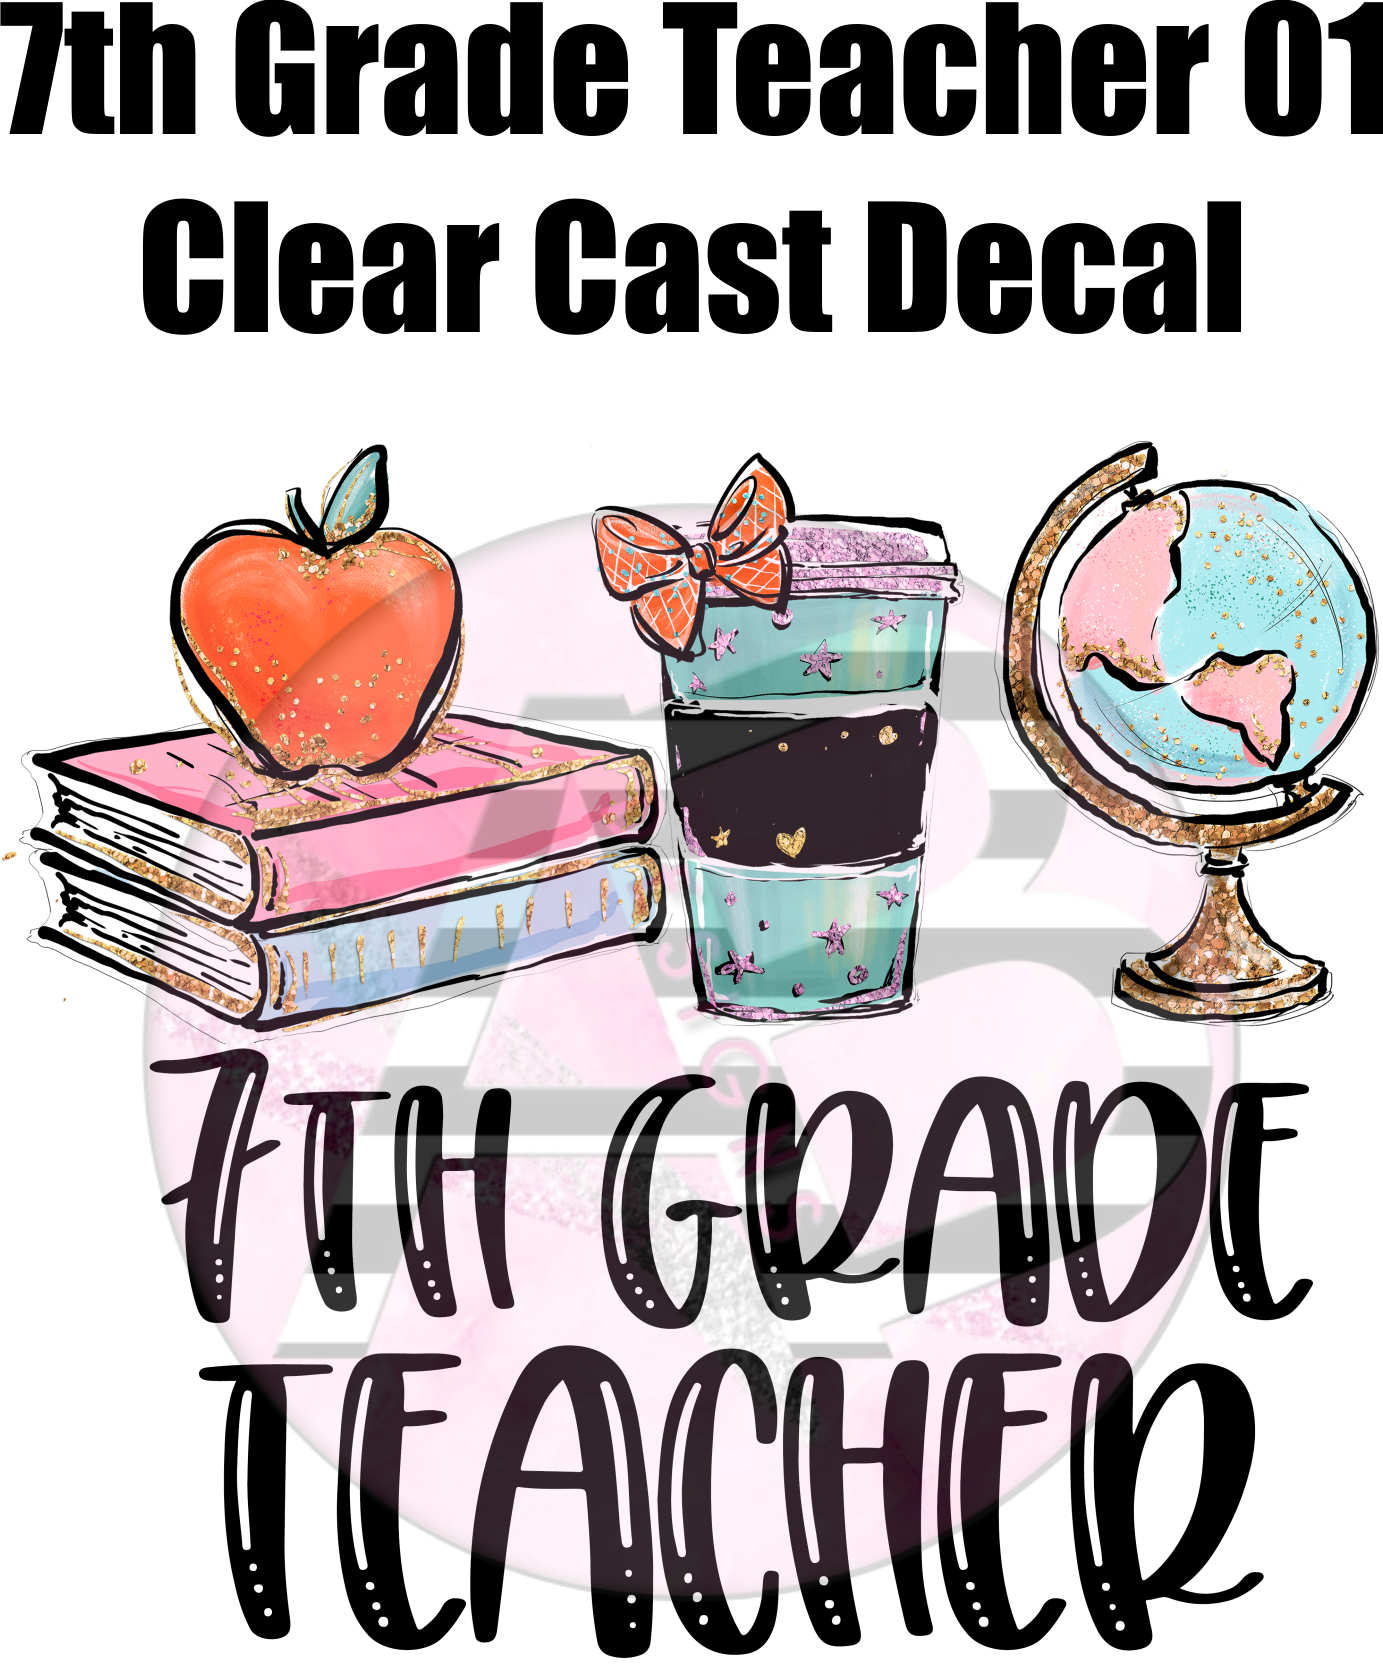 7th Grade Teacher 01 - Clear Cast Decal